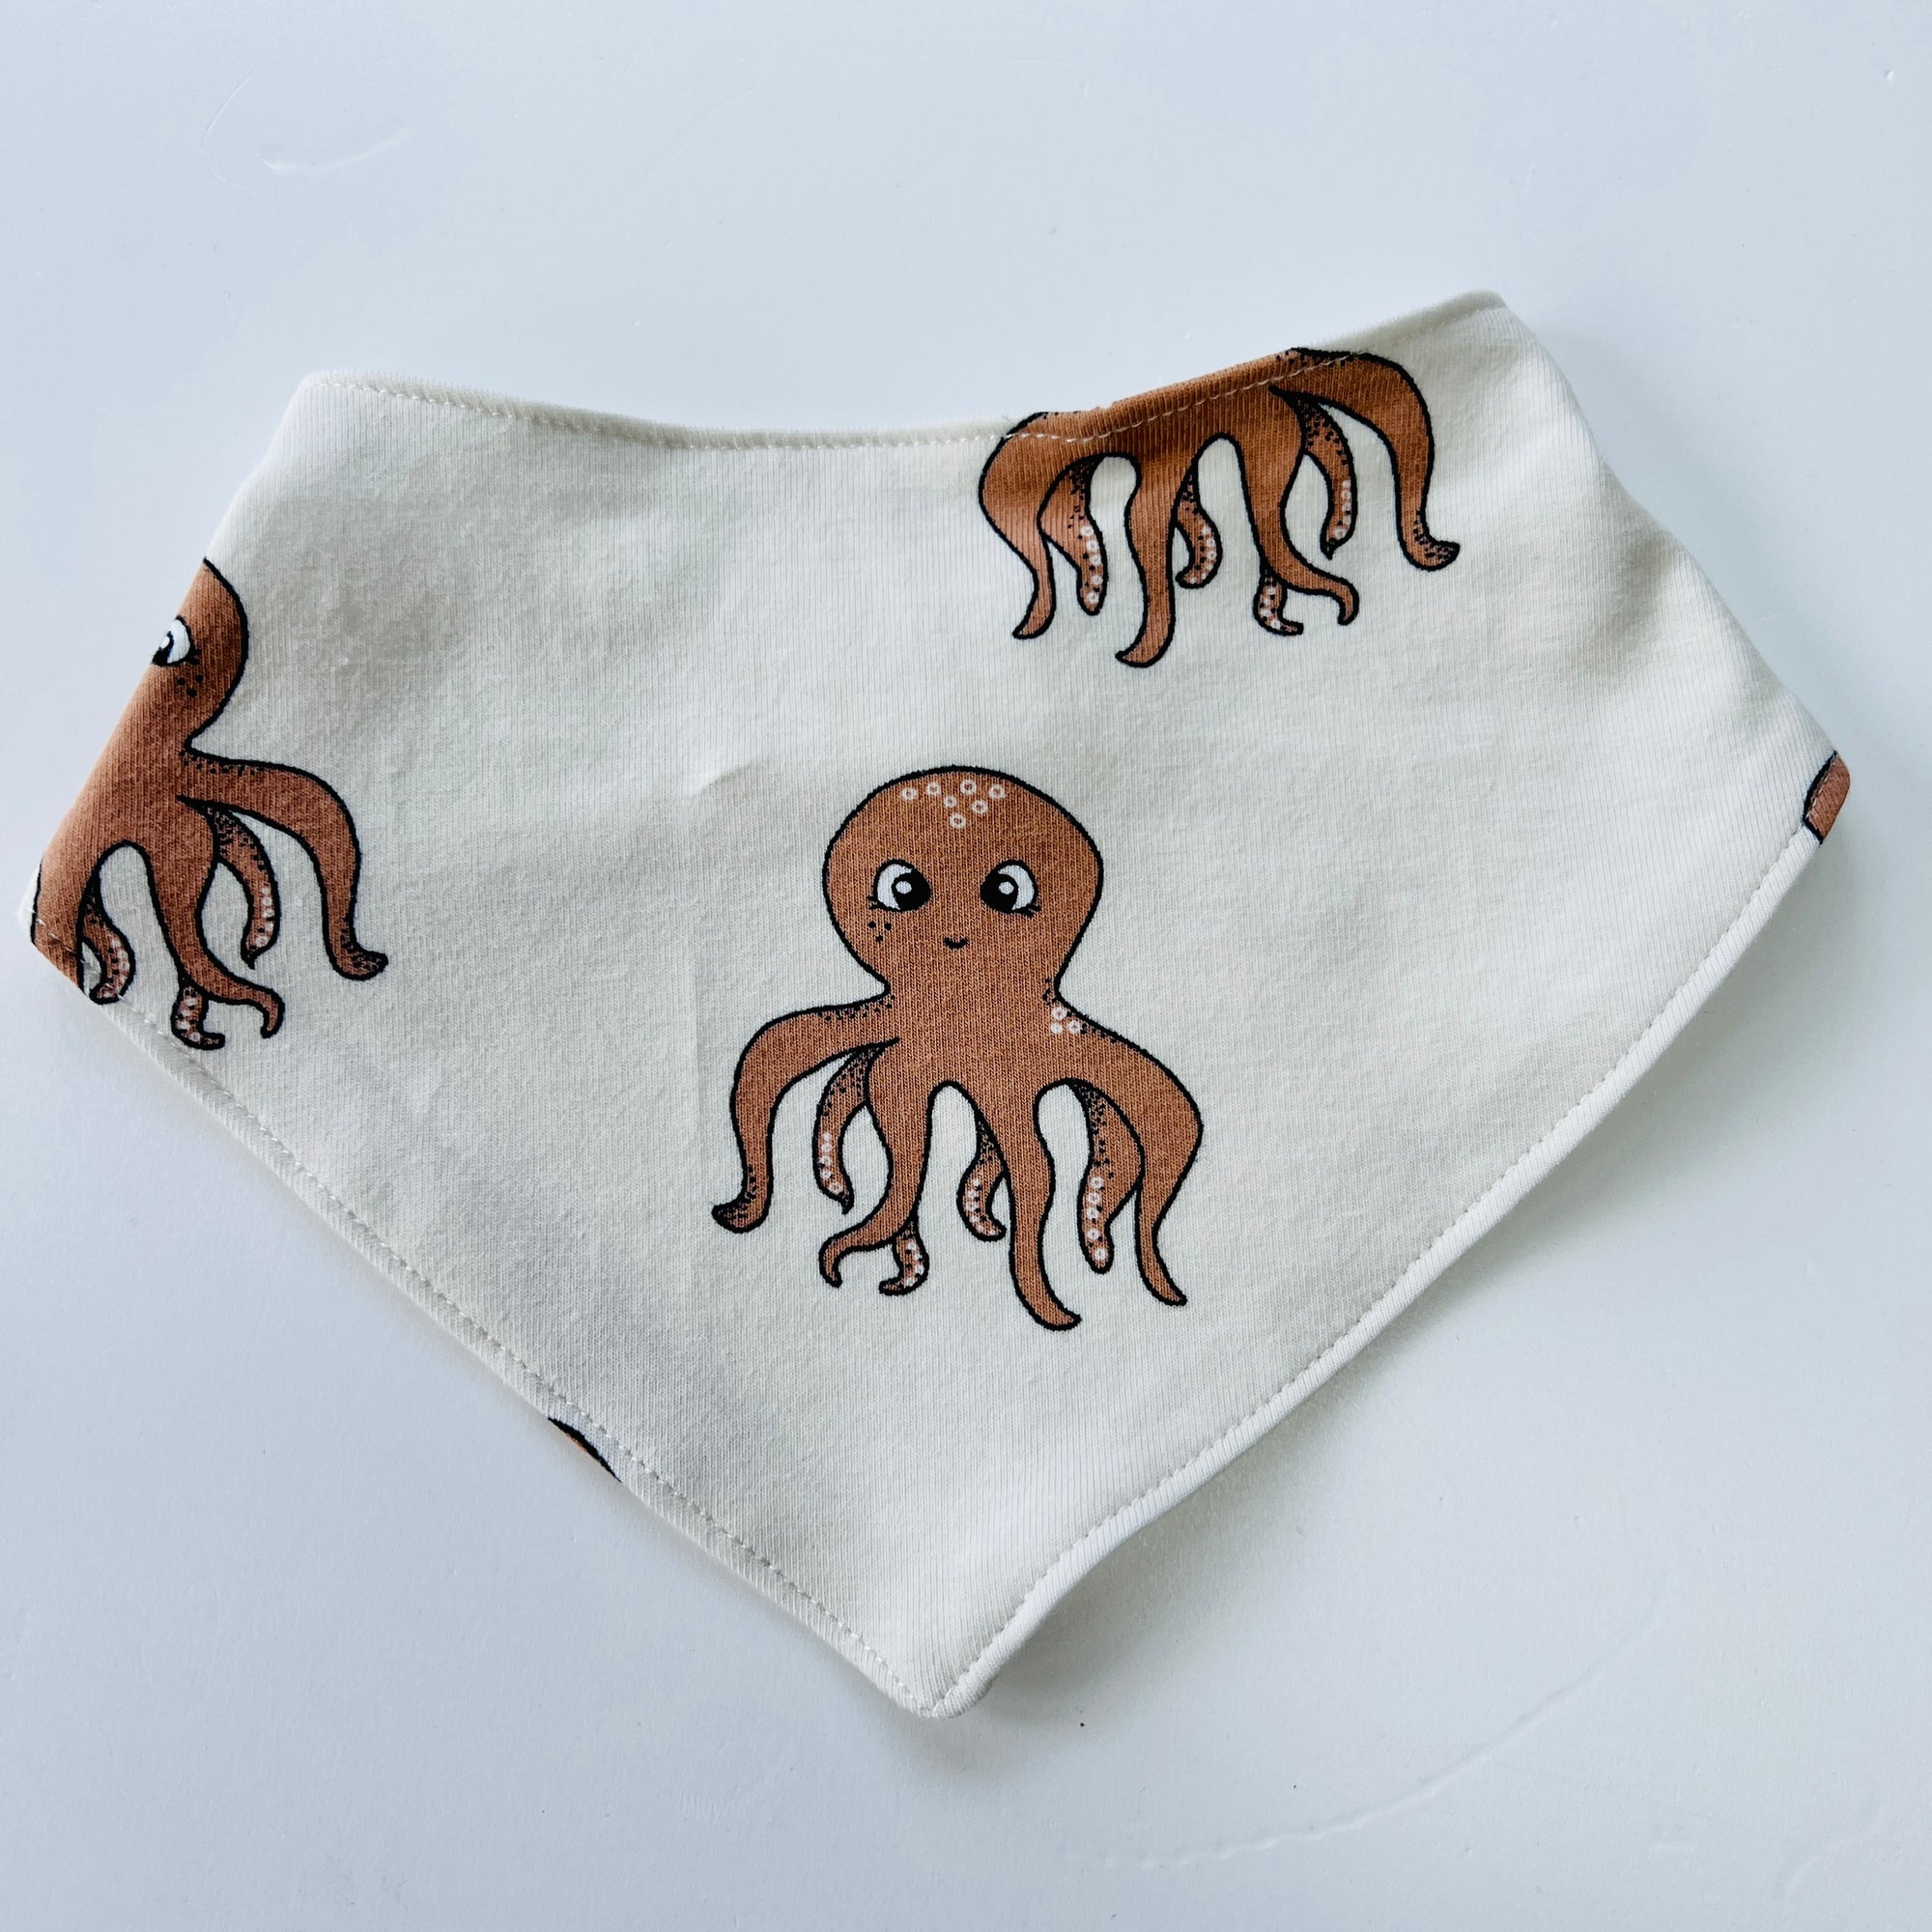 Eddie & Bee organic cotton Baby Dribble bib  in oat "Octopus" print.